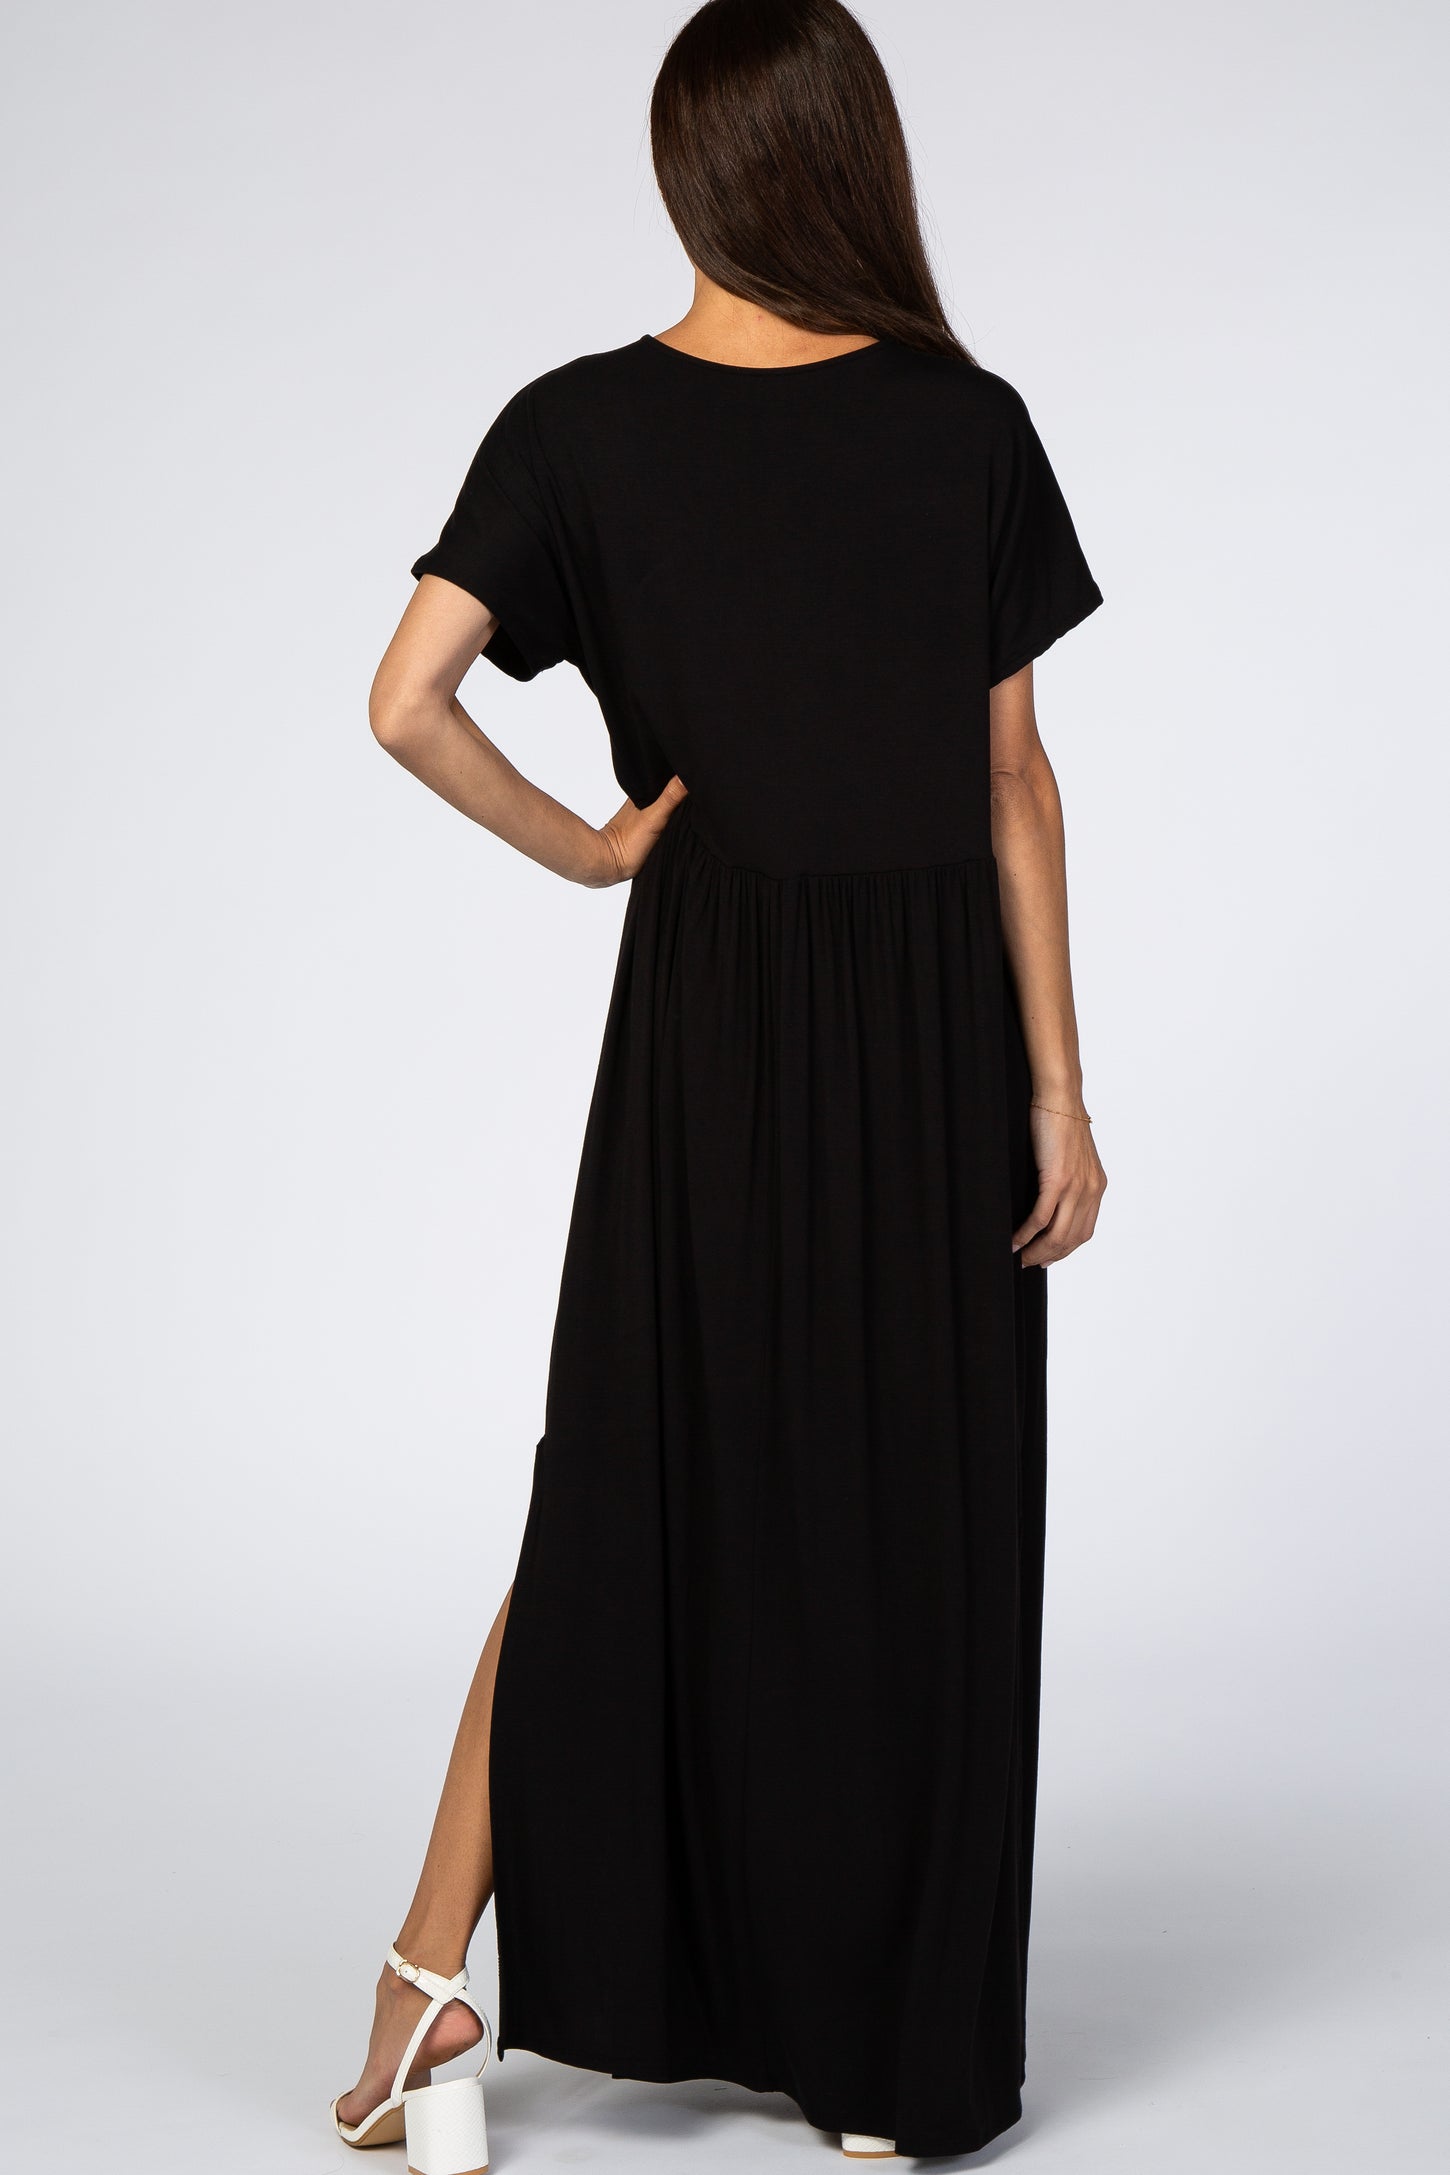 Black Empire Waist Side Slit Maxi Dress